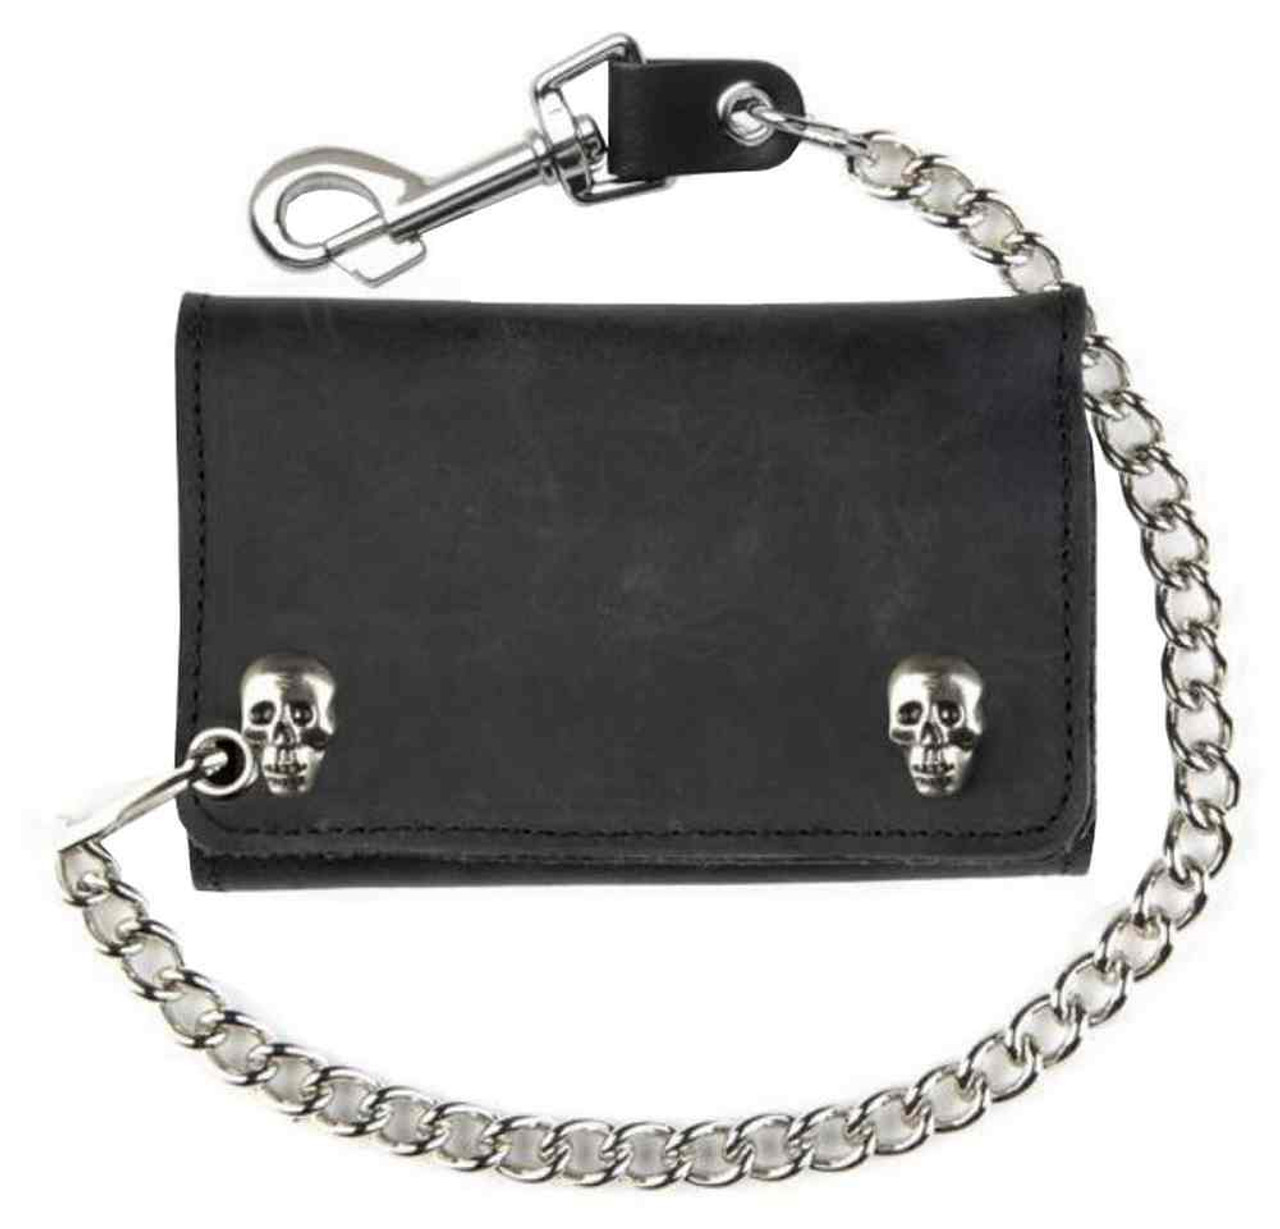 Men Men's Leather Wallet Chain C1 Sim ID Credit Card Holder Double  Zipper Coin